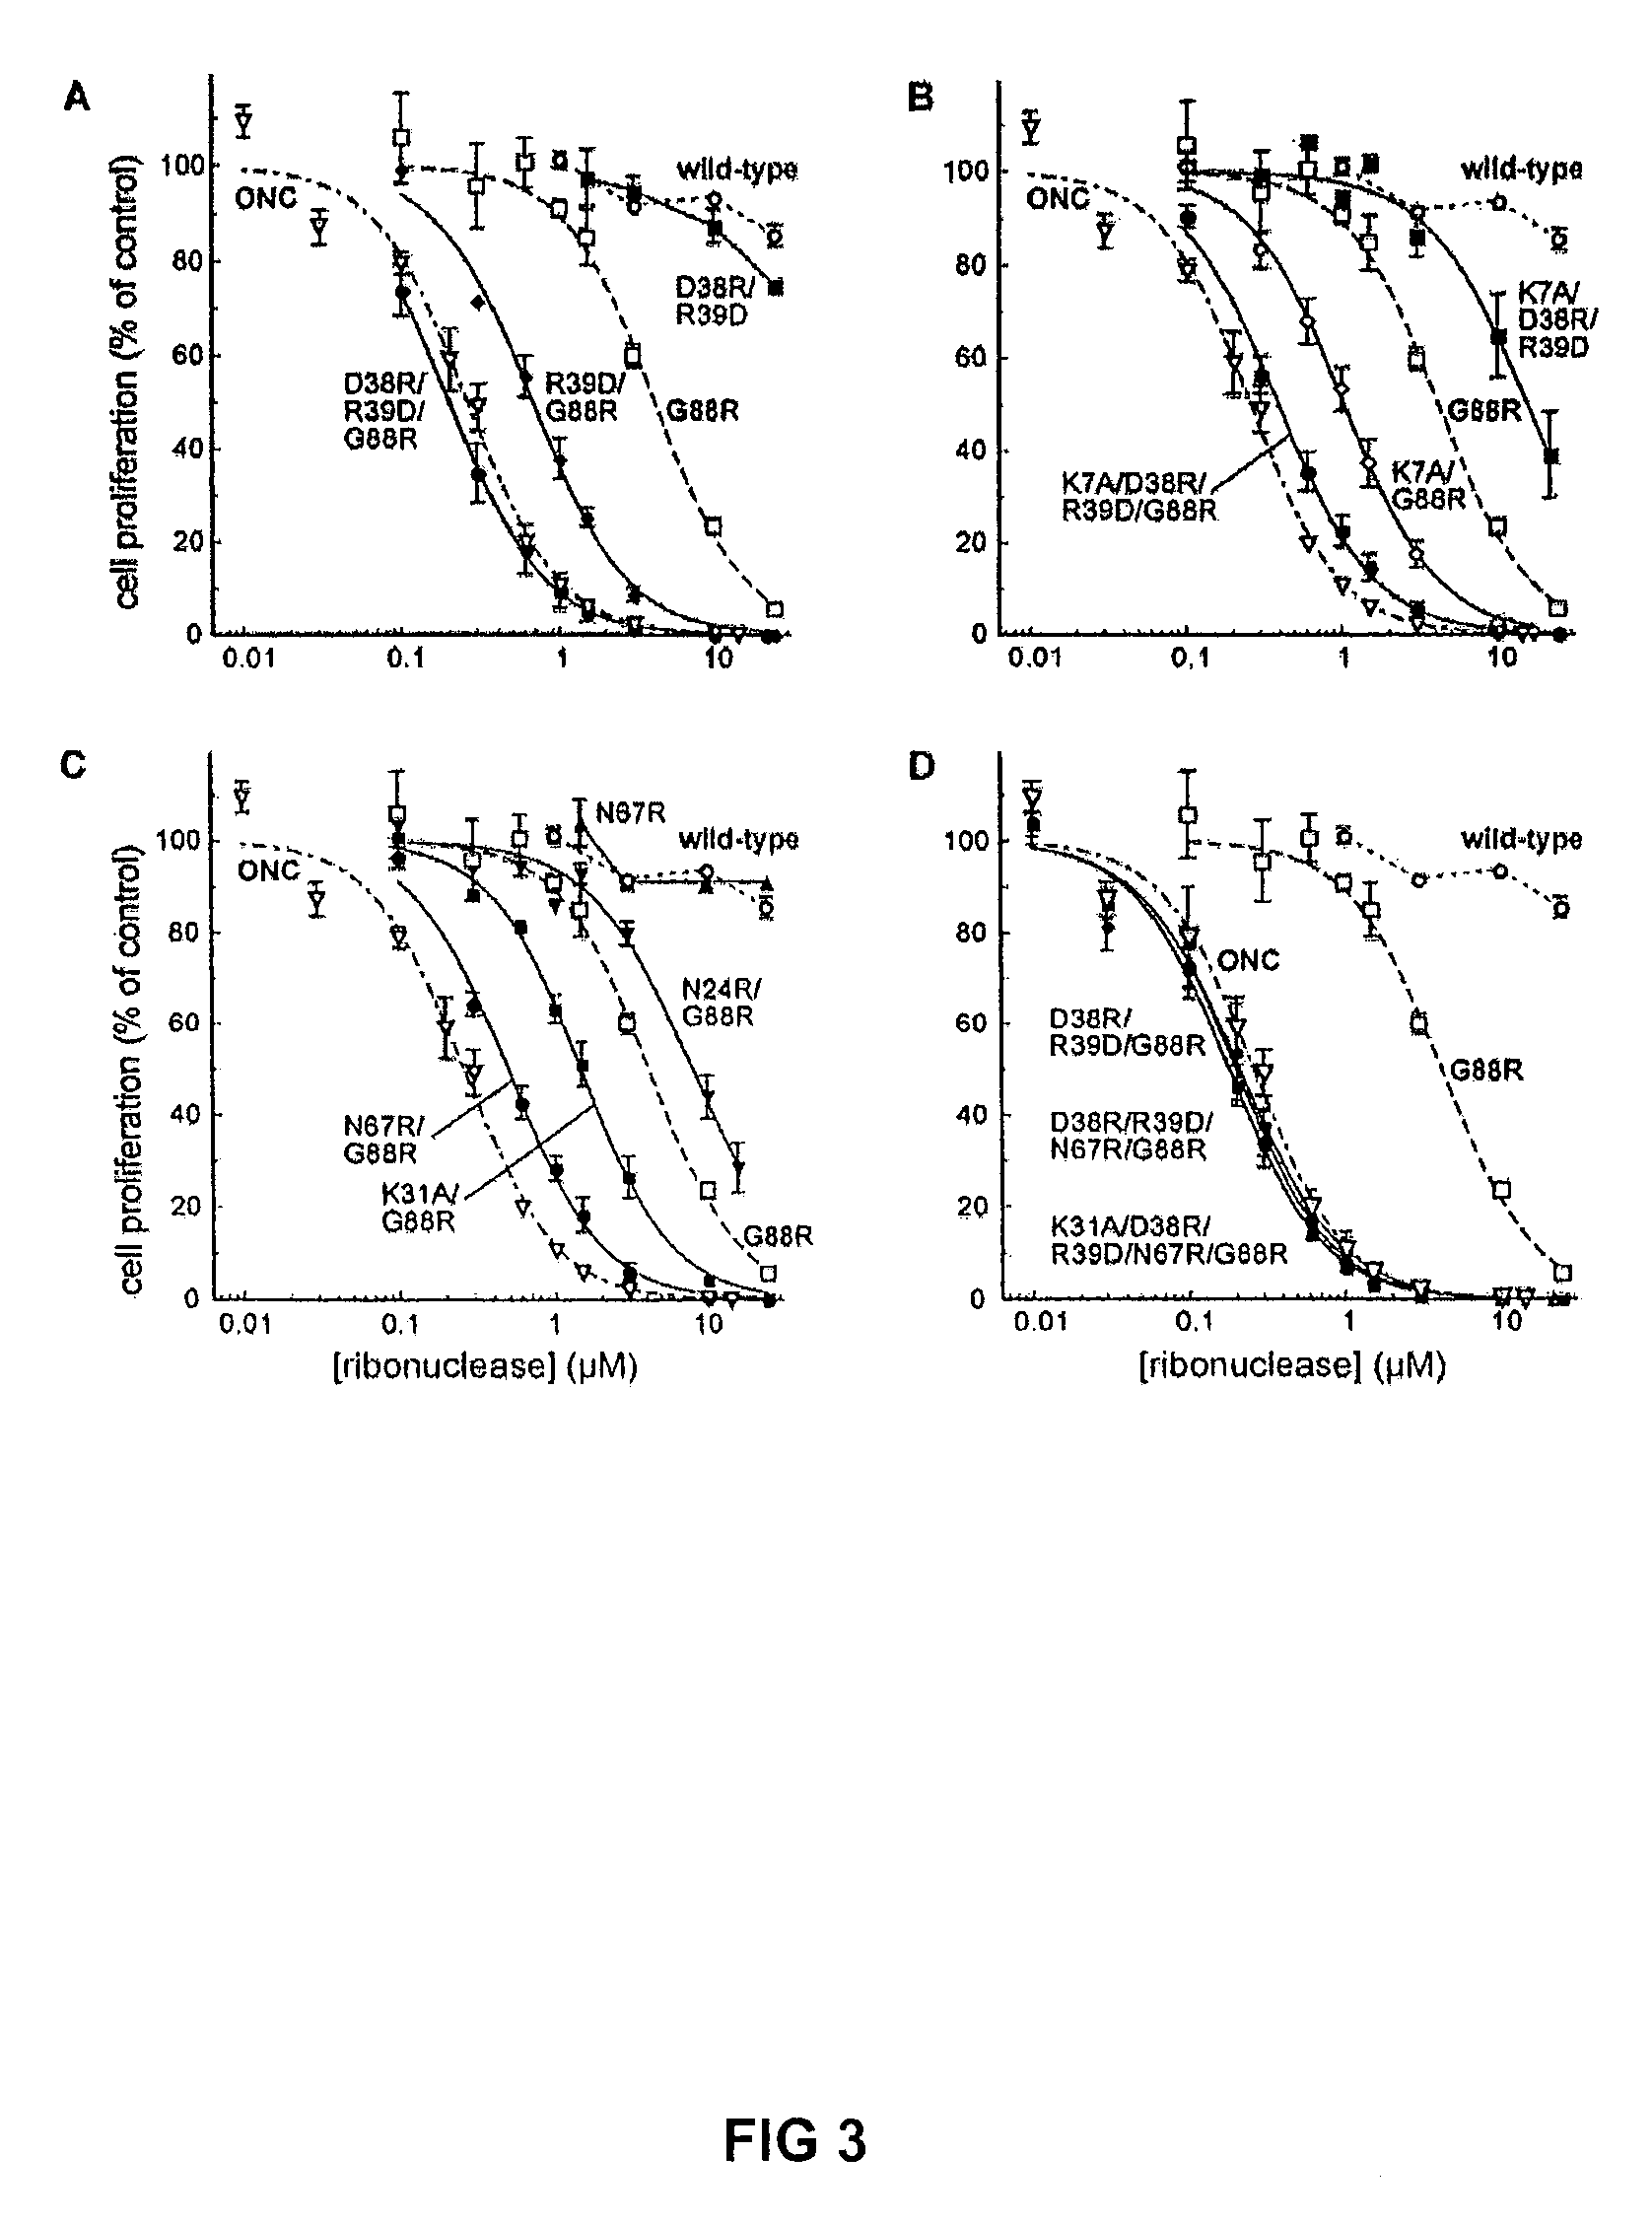 Cytotoxic ribonuclease variants